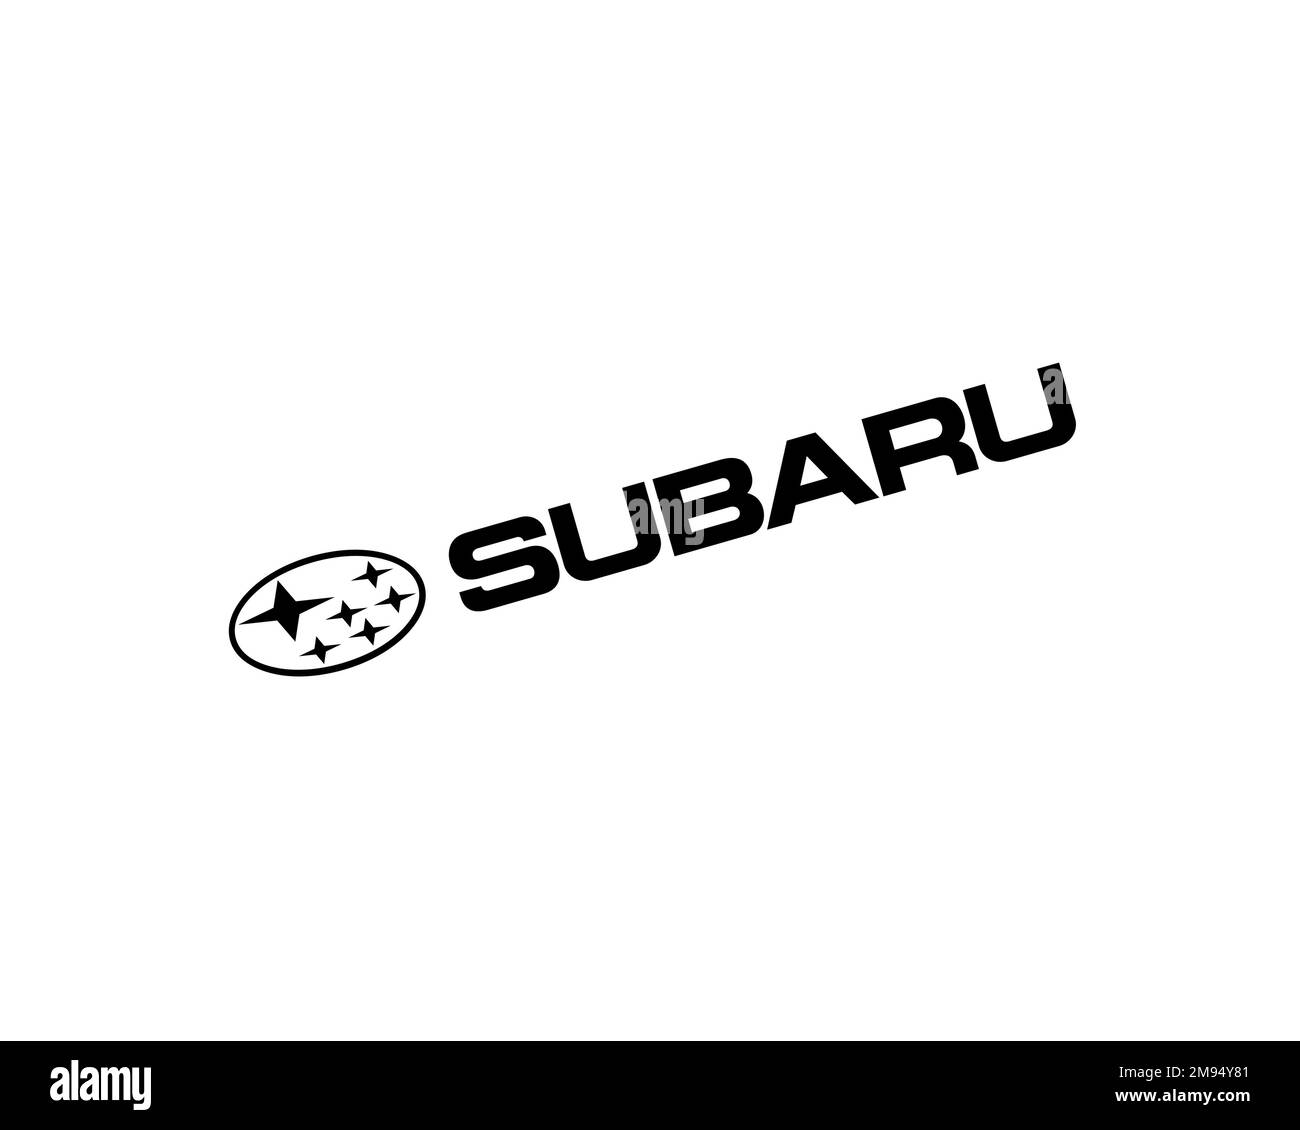 Subaru, Rotated Logo, White Background Stock Photo